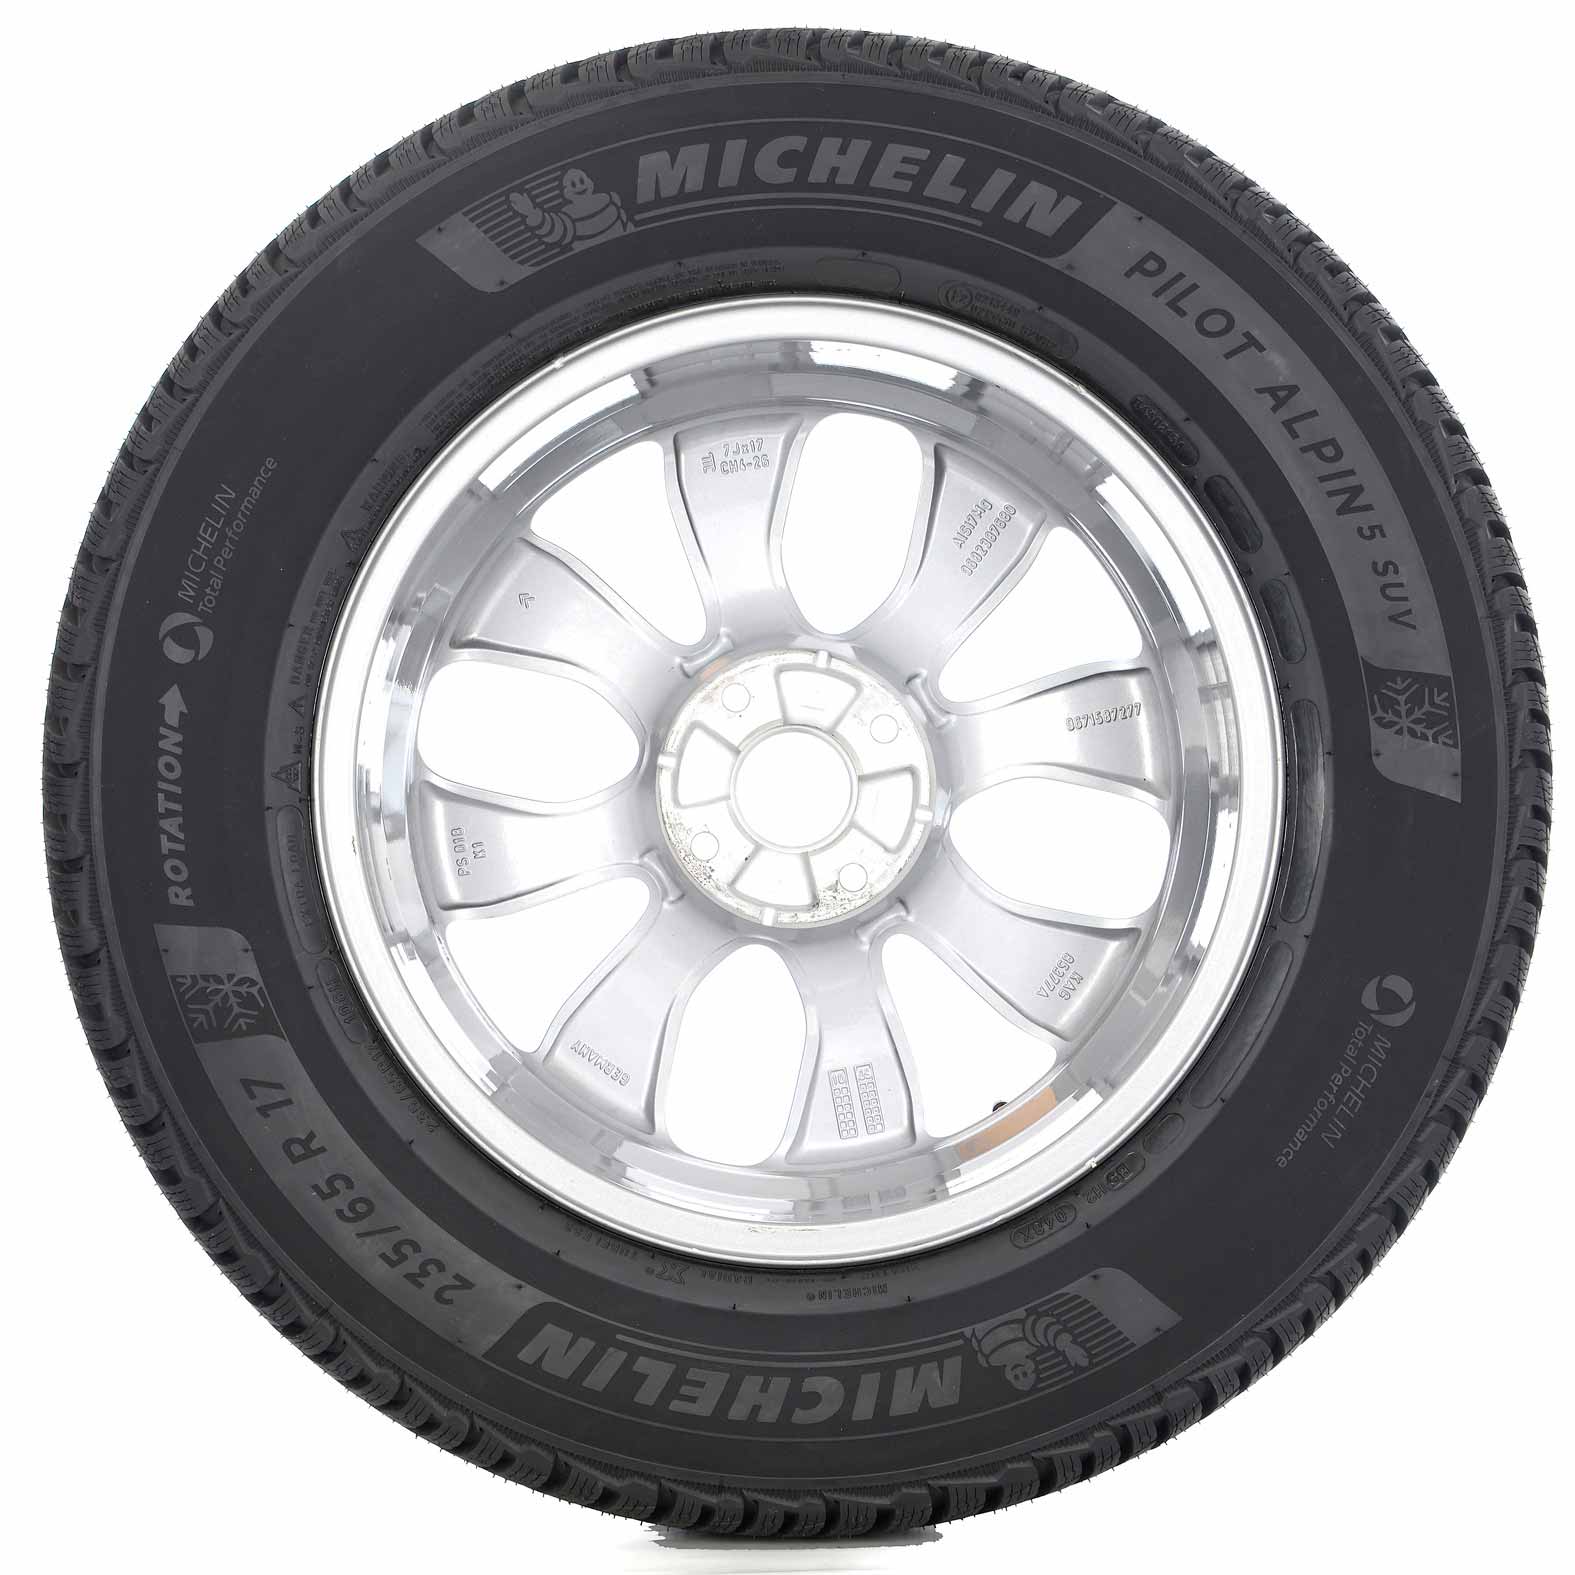 Michelin Pilot Alpin 5 SUV Tires for Winter | Kal Tire